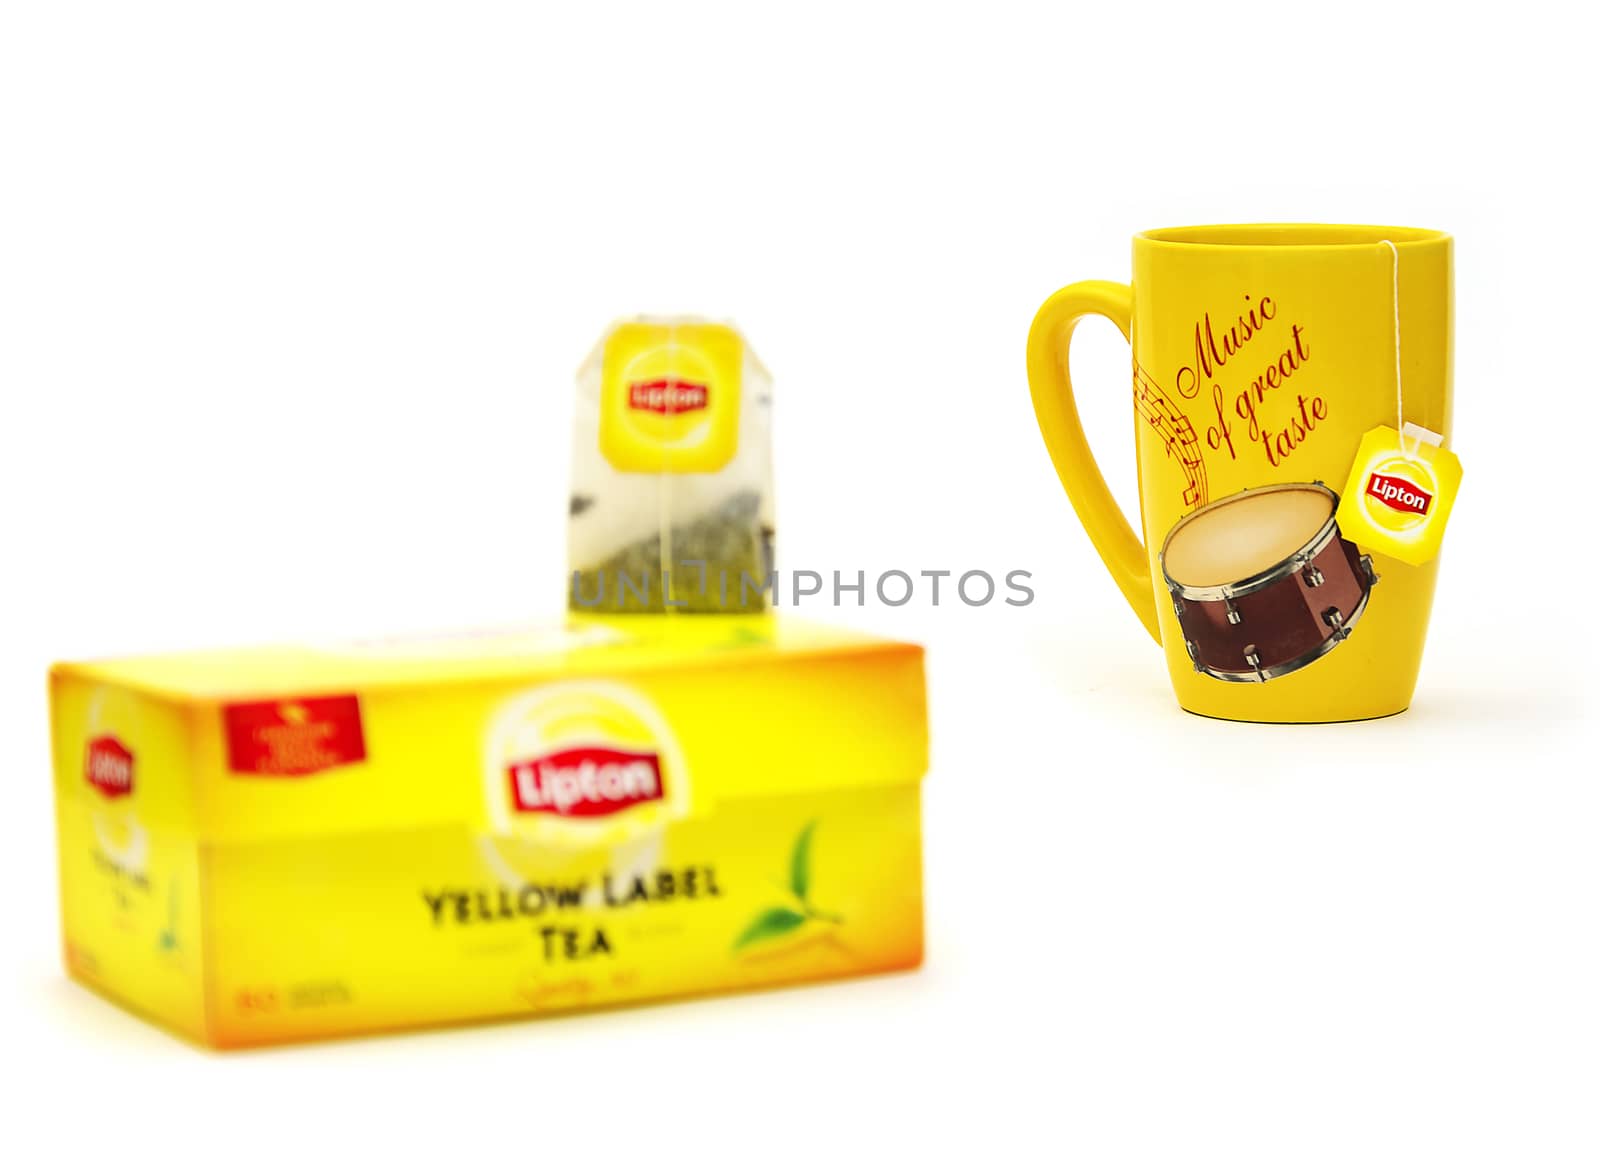 Yellow mug and tea bag packing with Lipton by Grommik